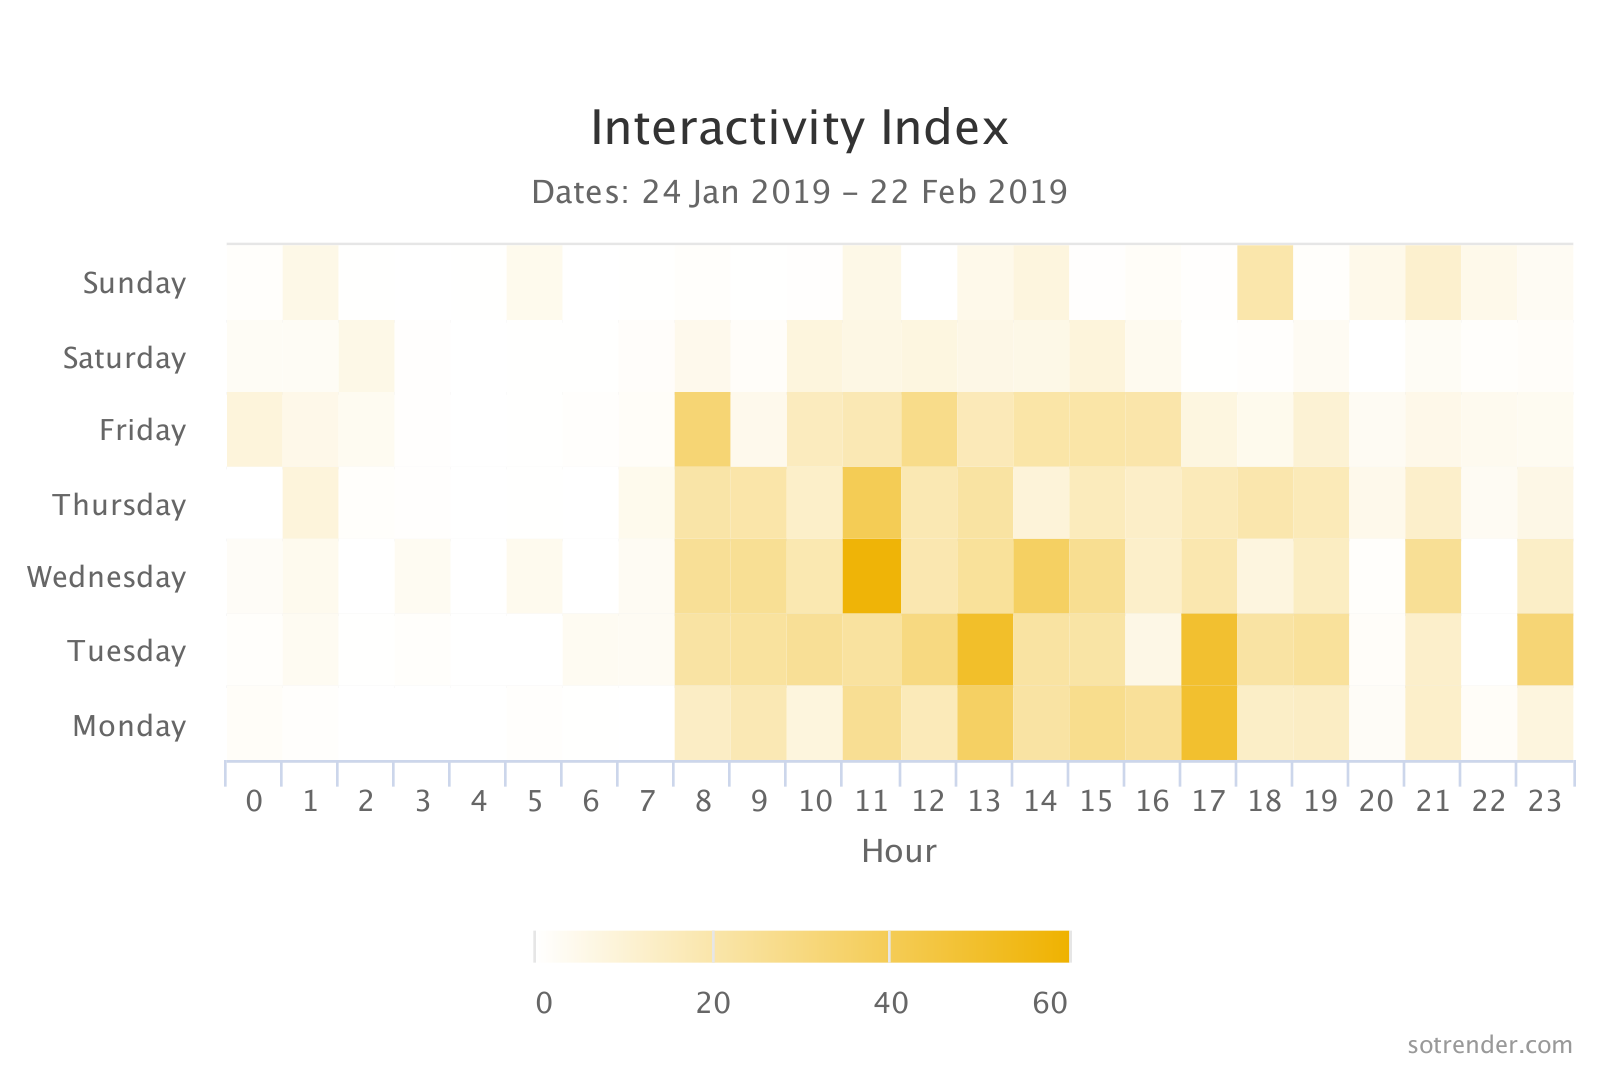 Interactivity Index at Sotrender 